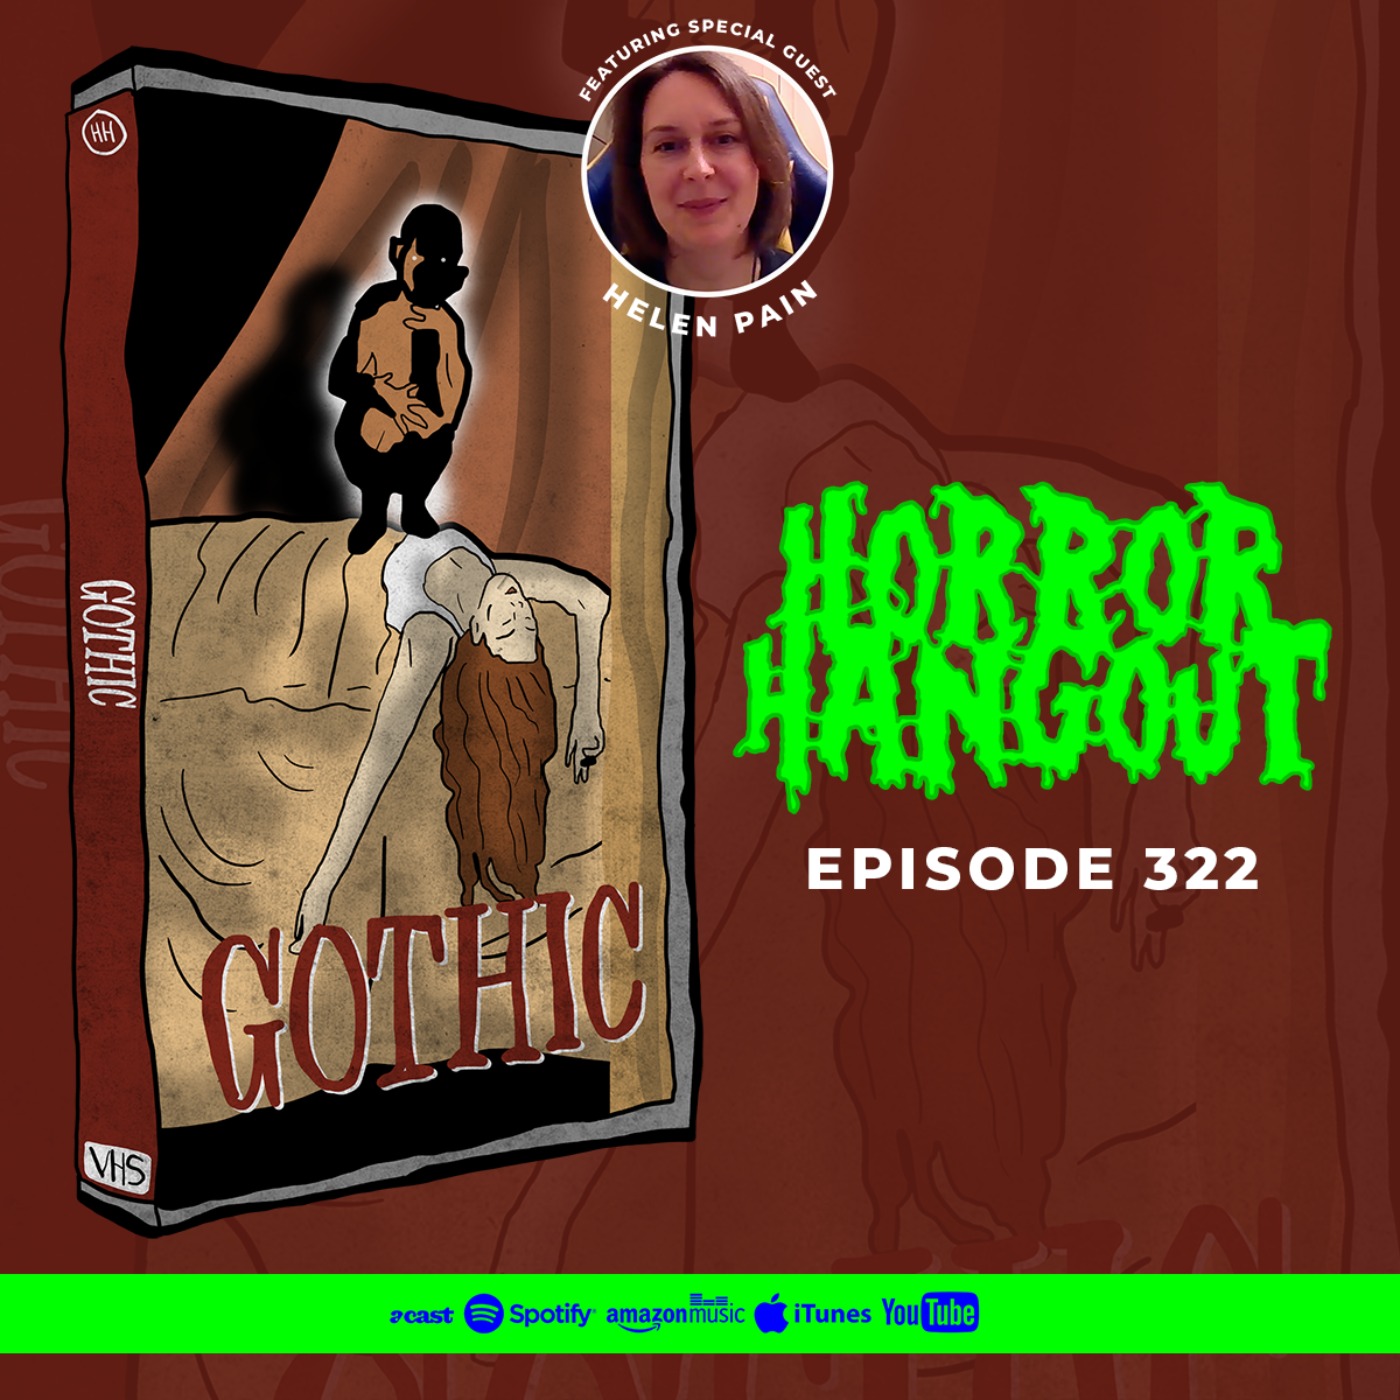 Horror Hangout #322 : Gothic (w/ Helen Pain)